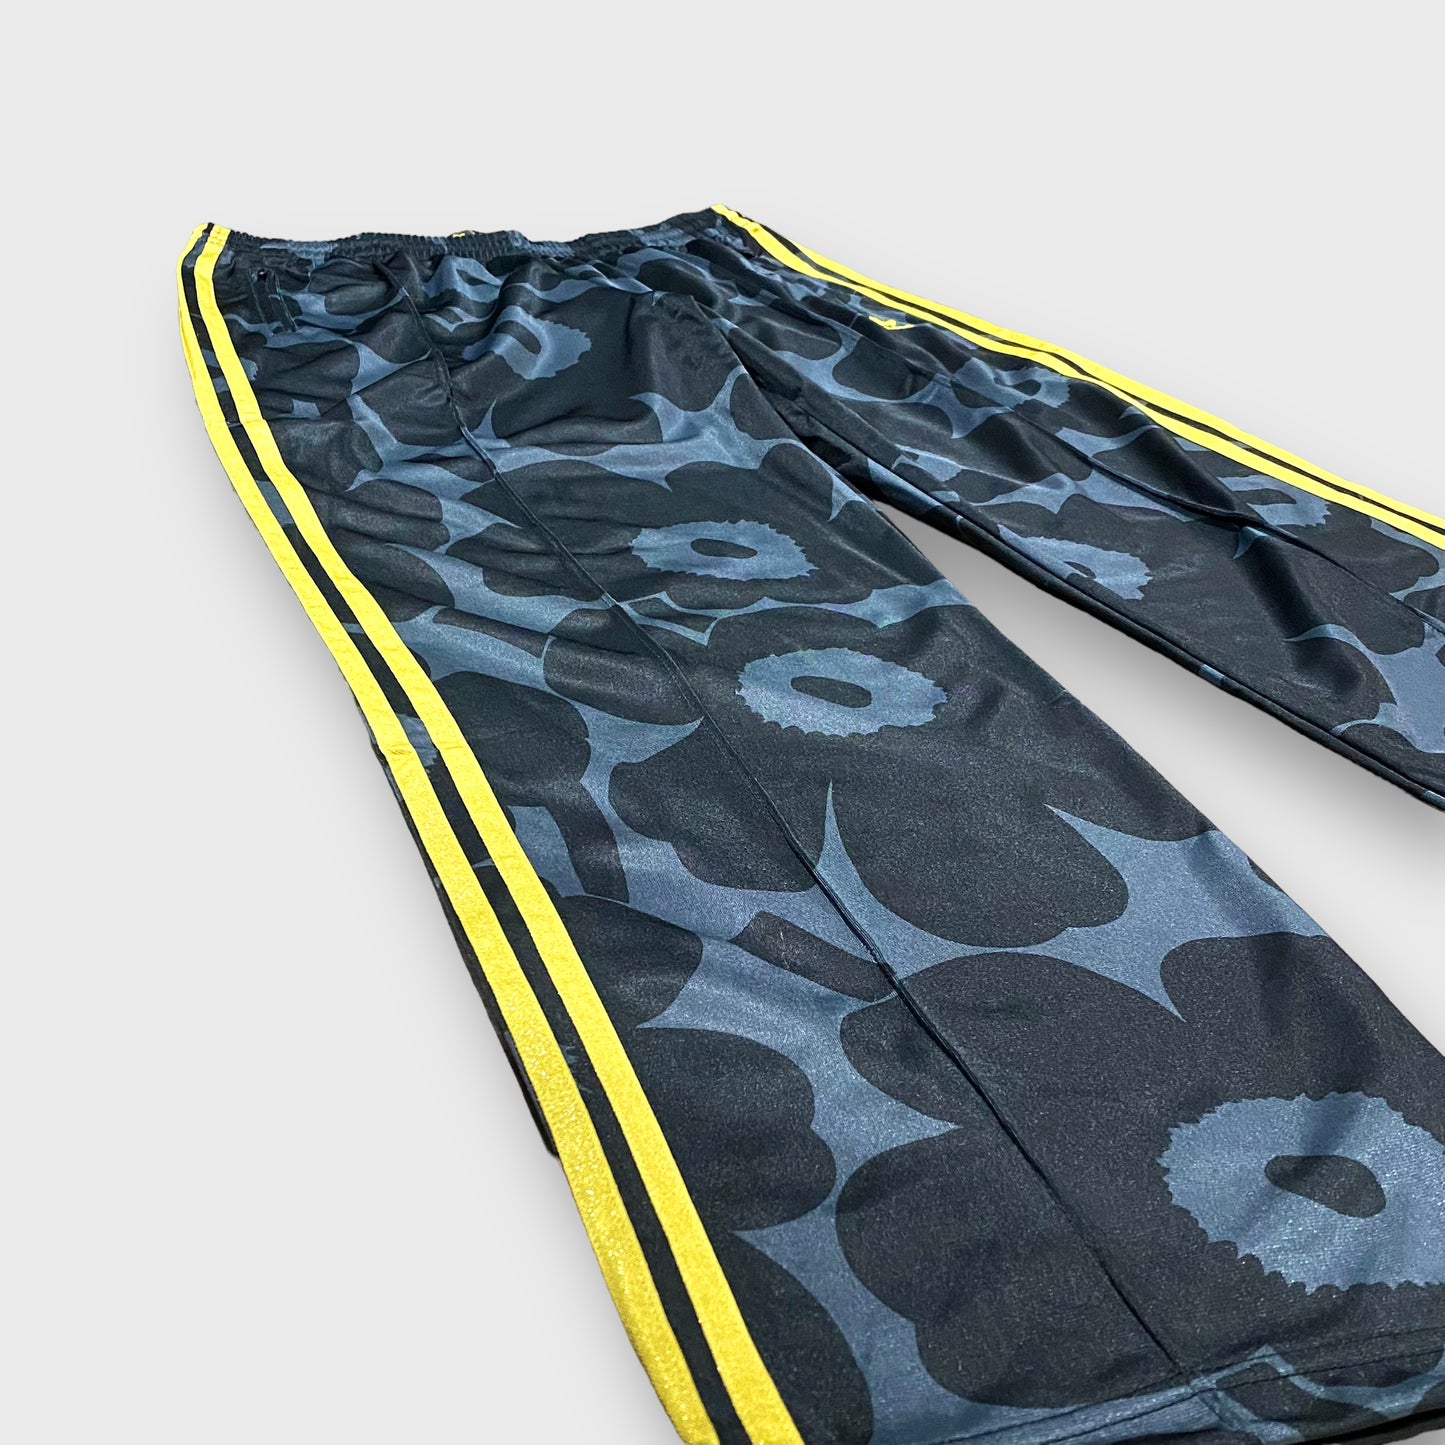 "adidas Marimekko" Flower pattern track pants